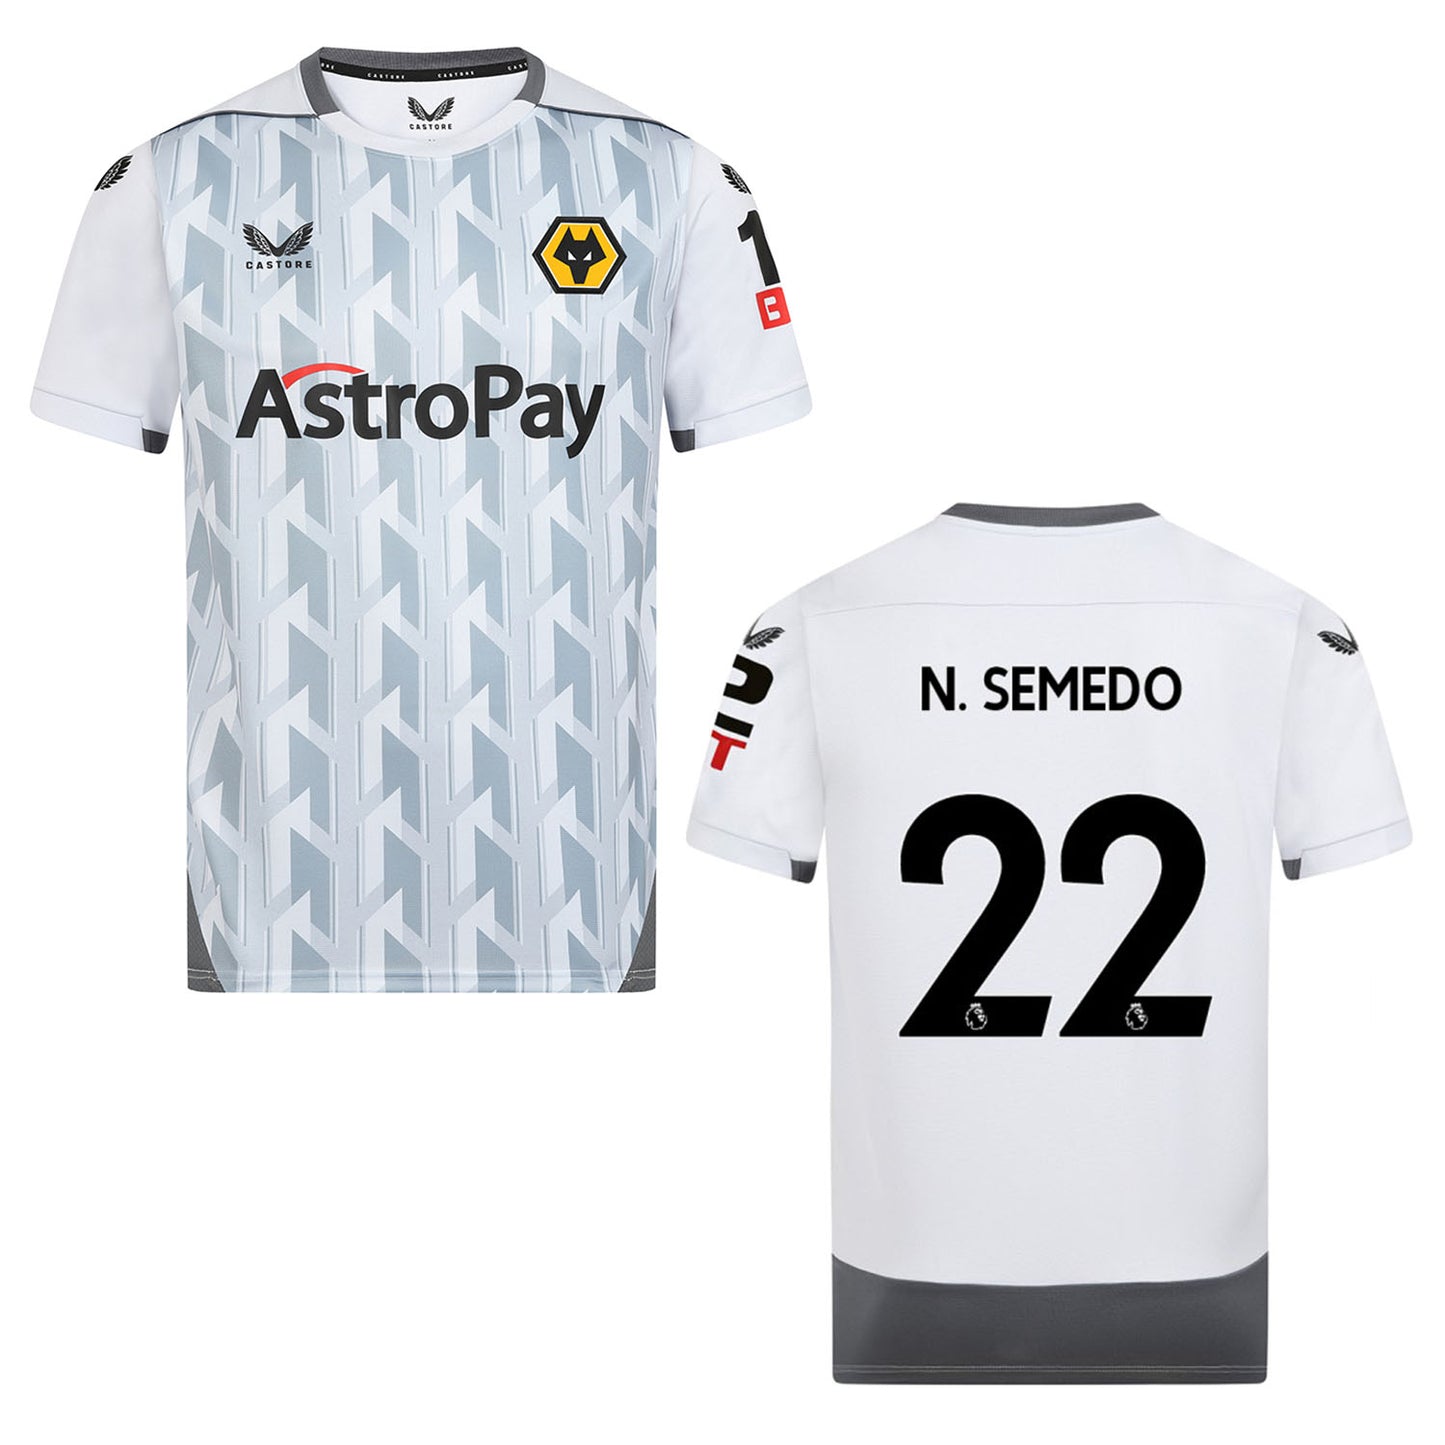 Nelson Semedo Wolves 22 Jersey